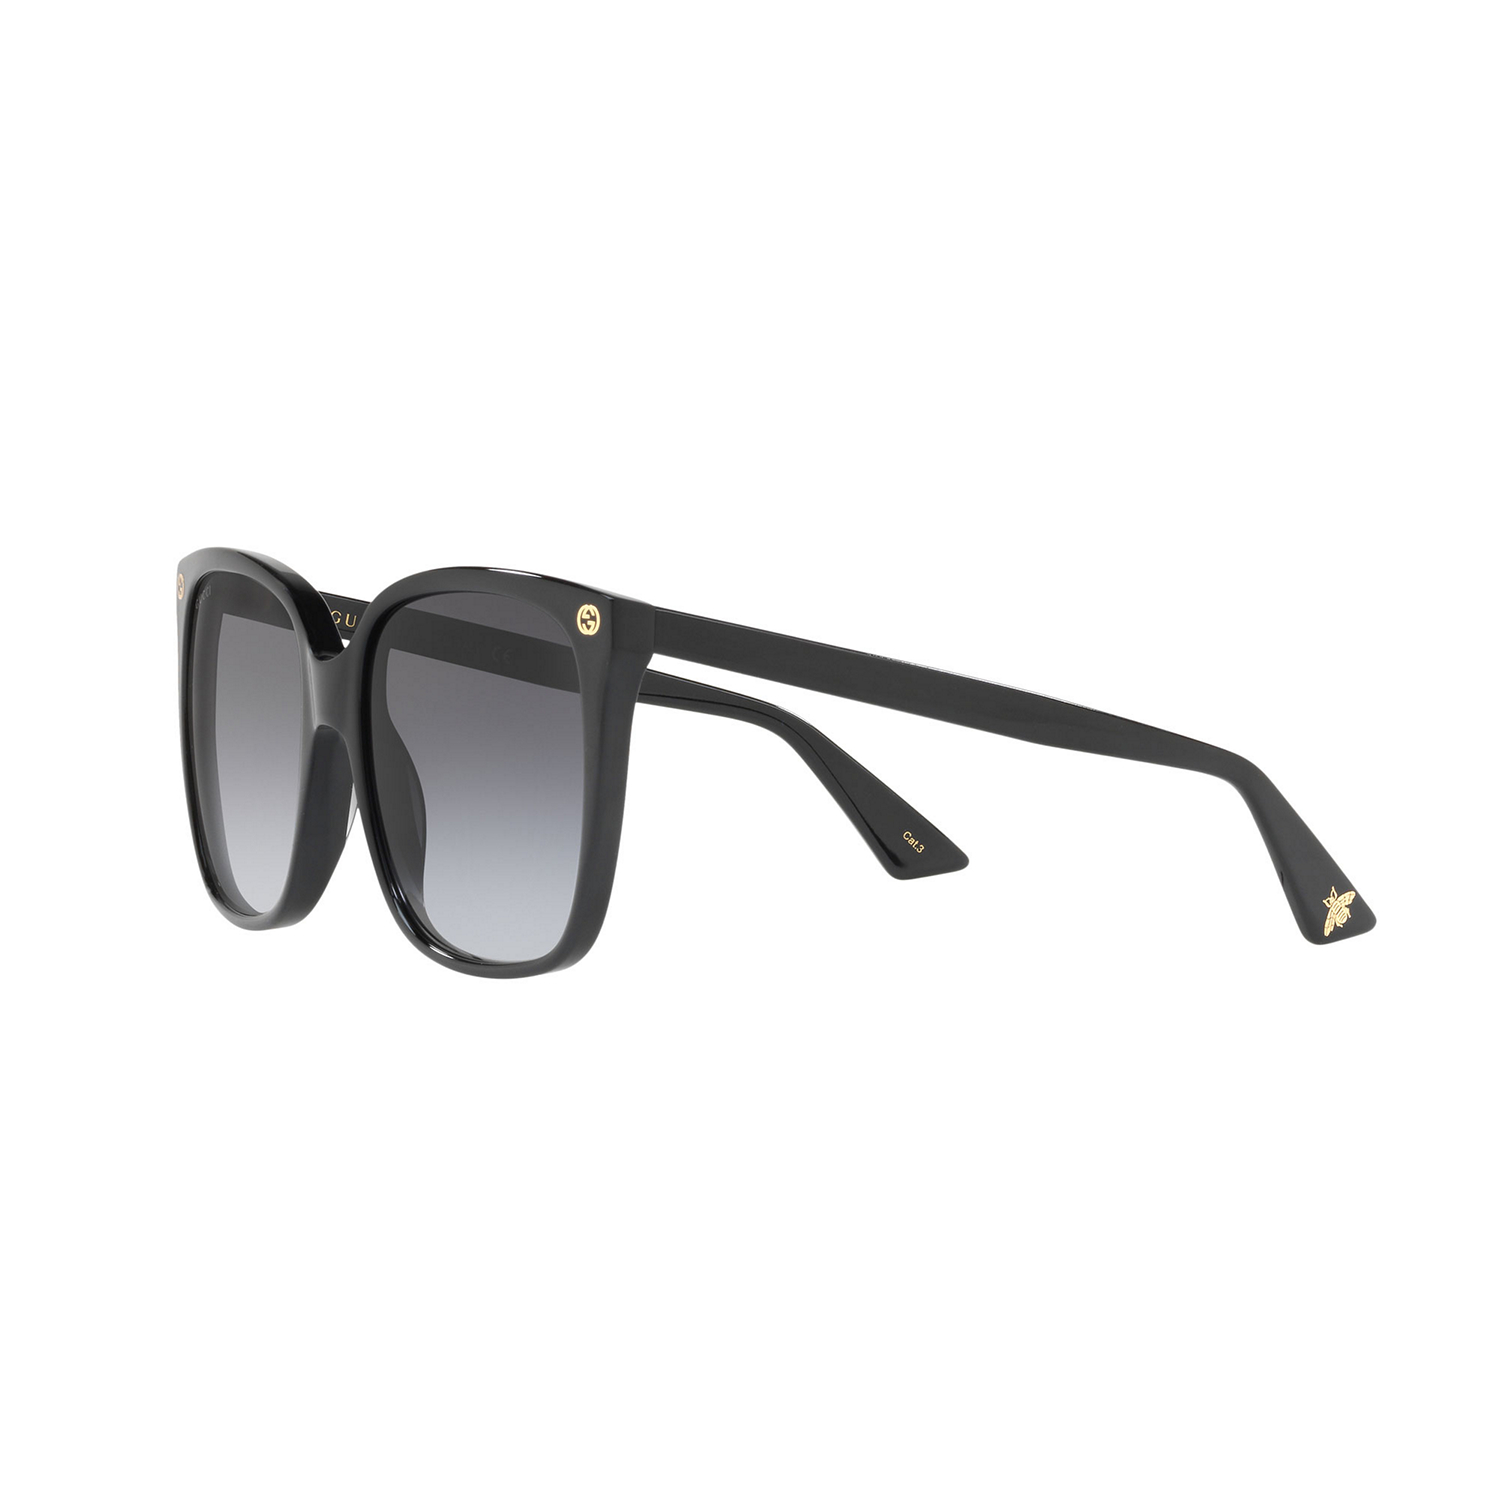 GG0022S Cat Eye Sunglasses